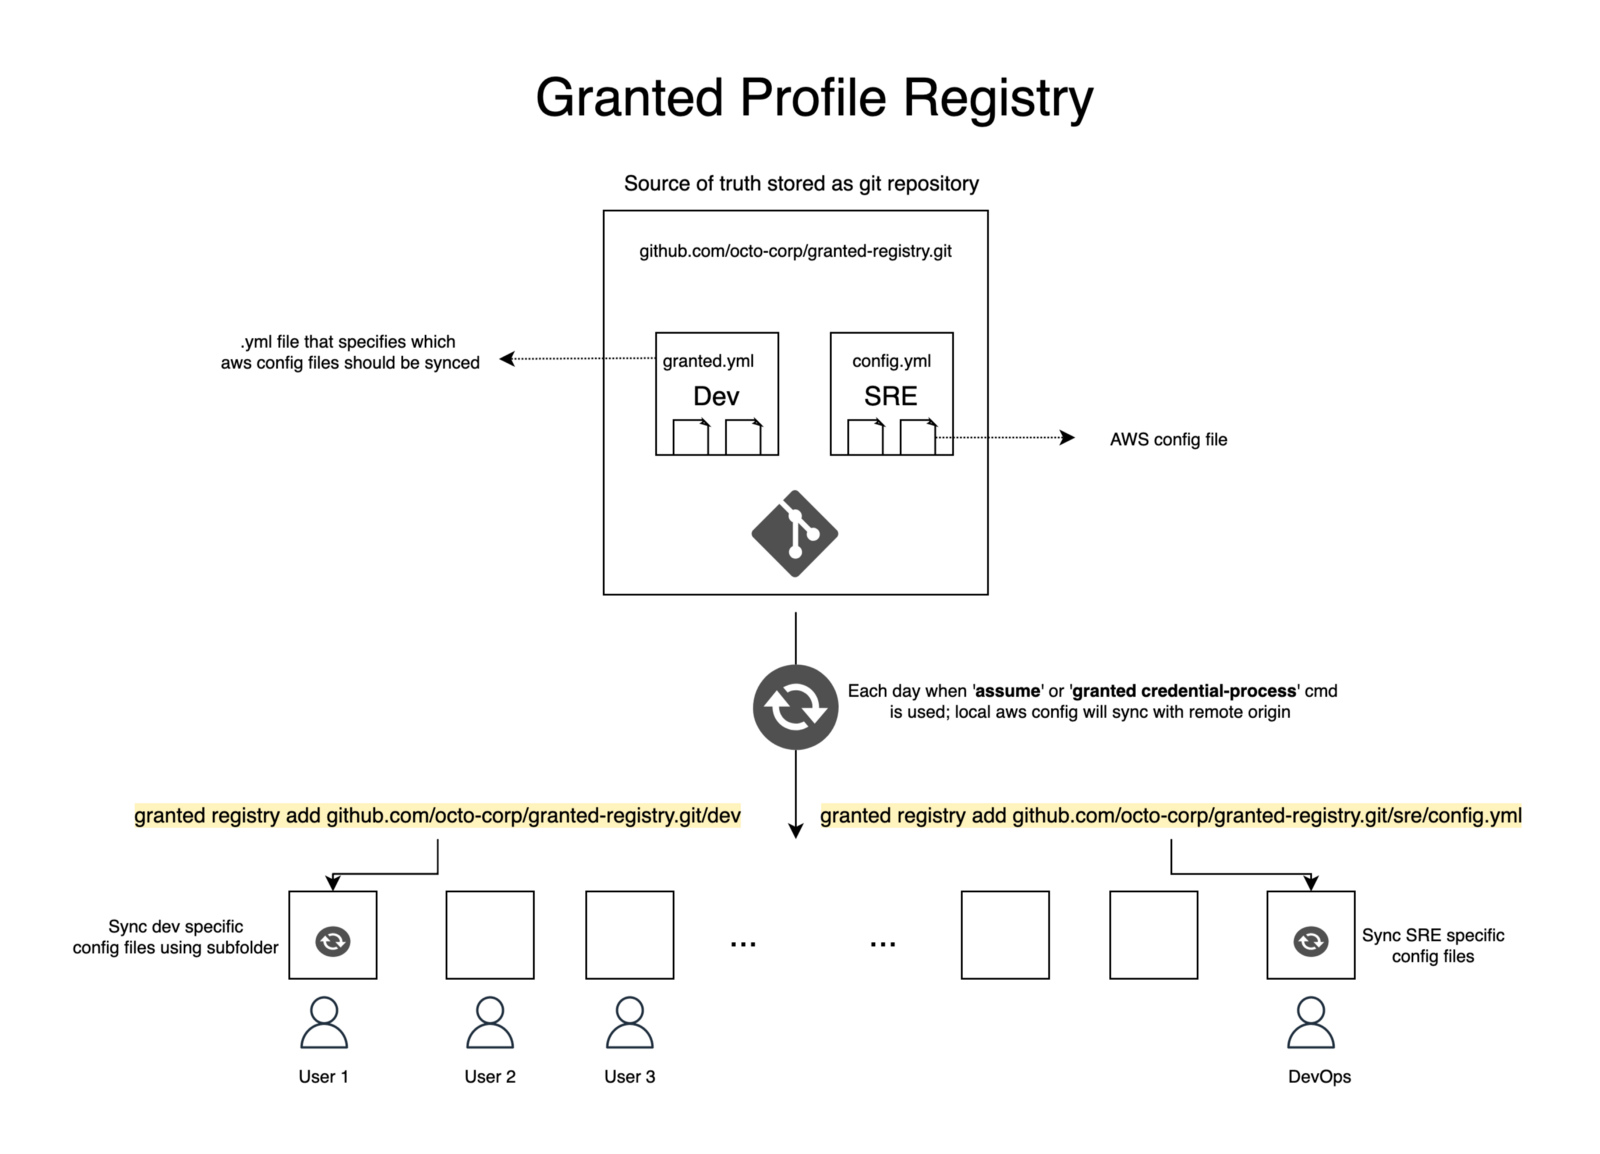 Granted's Profile Registry